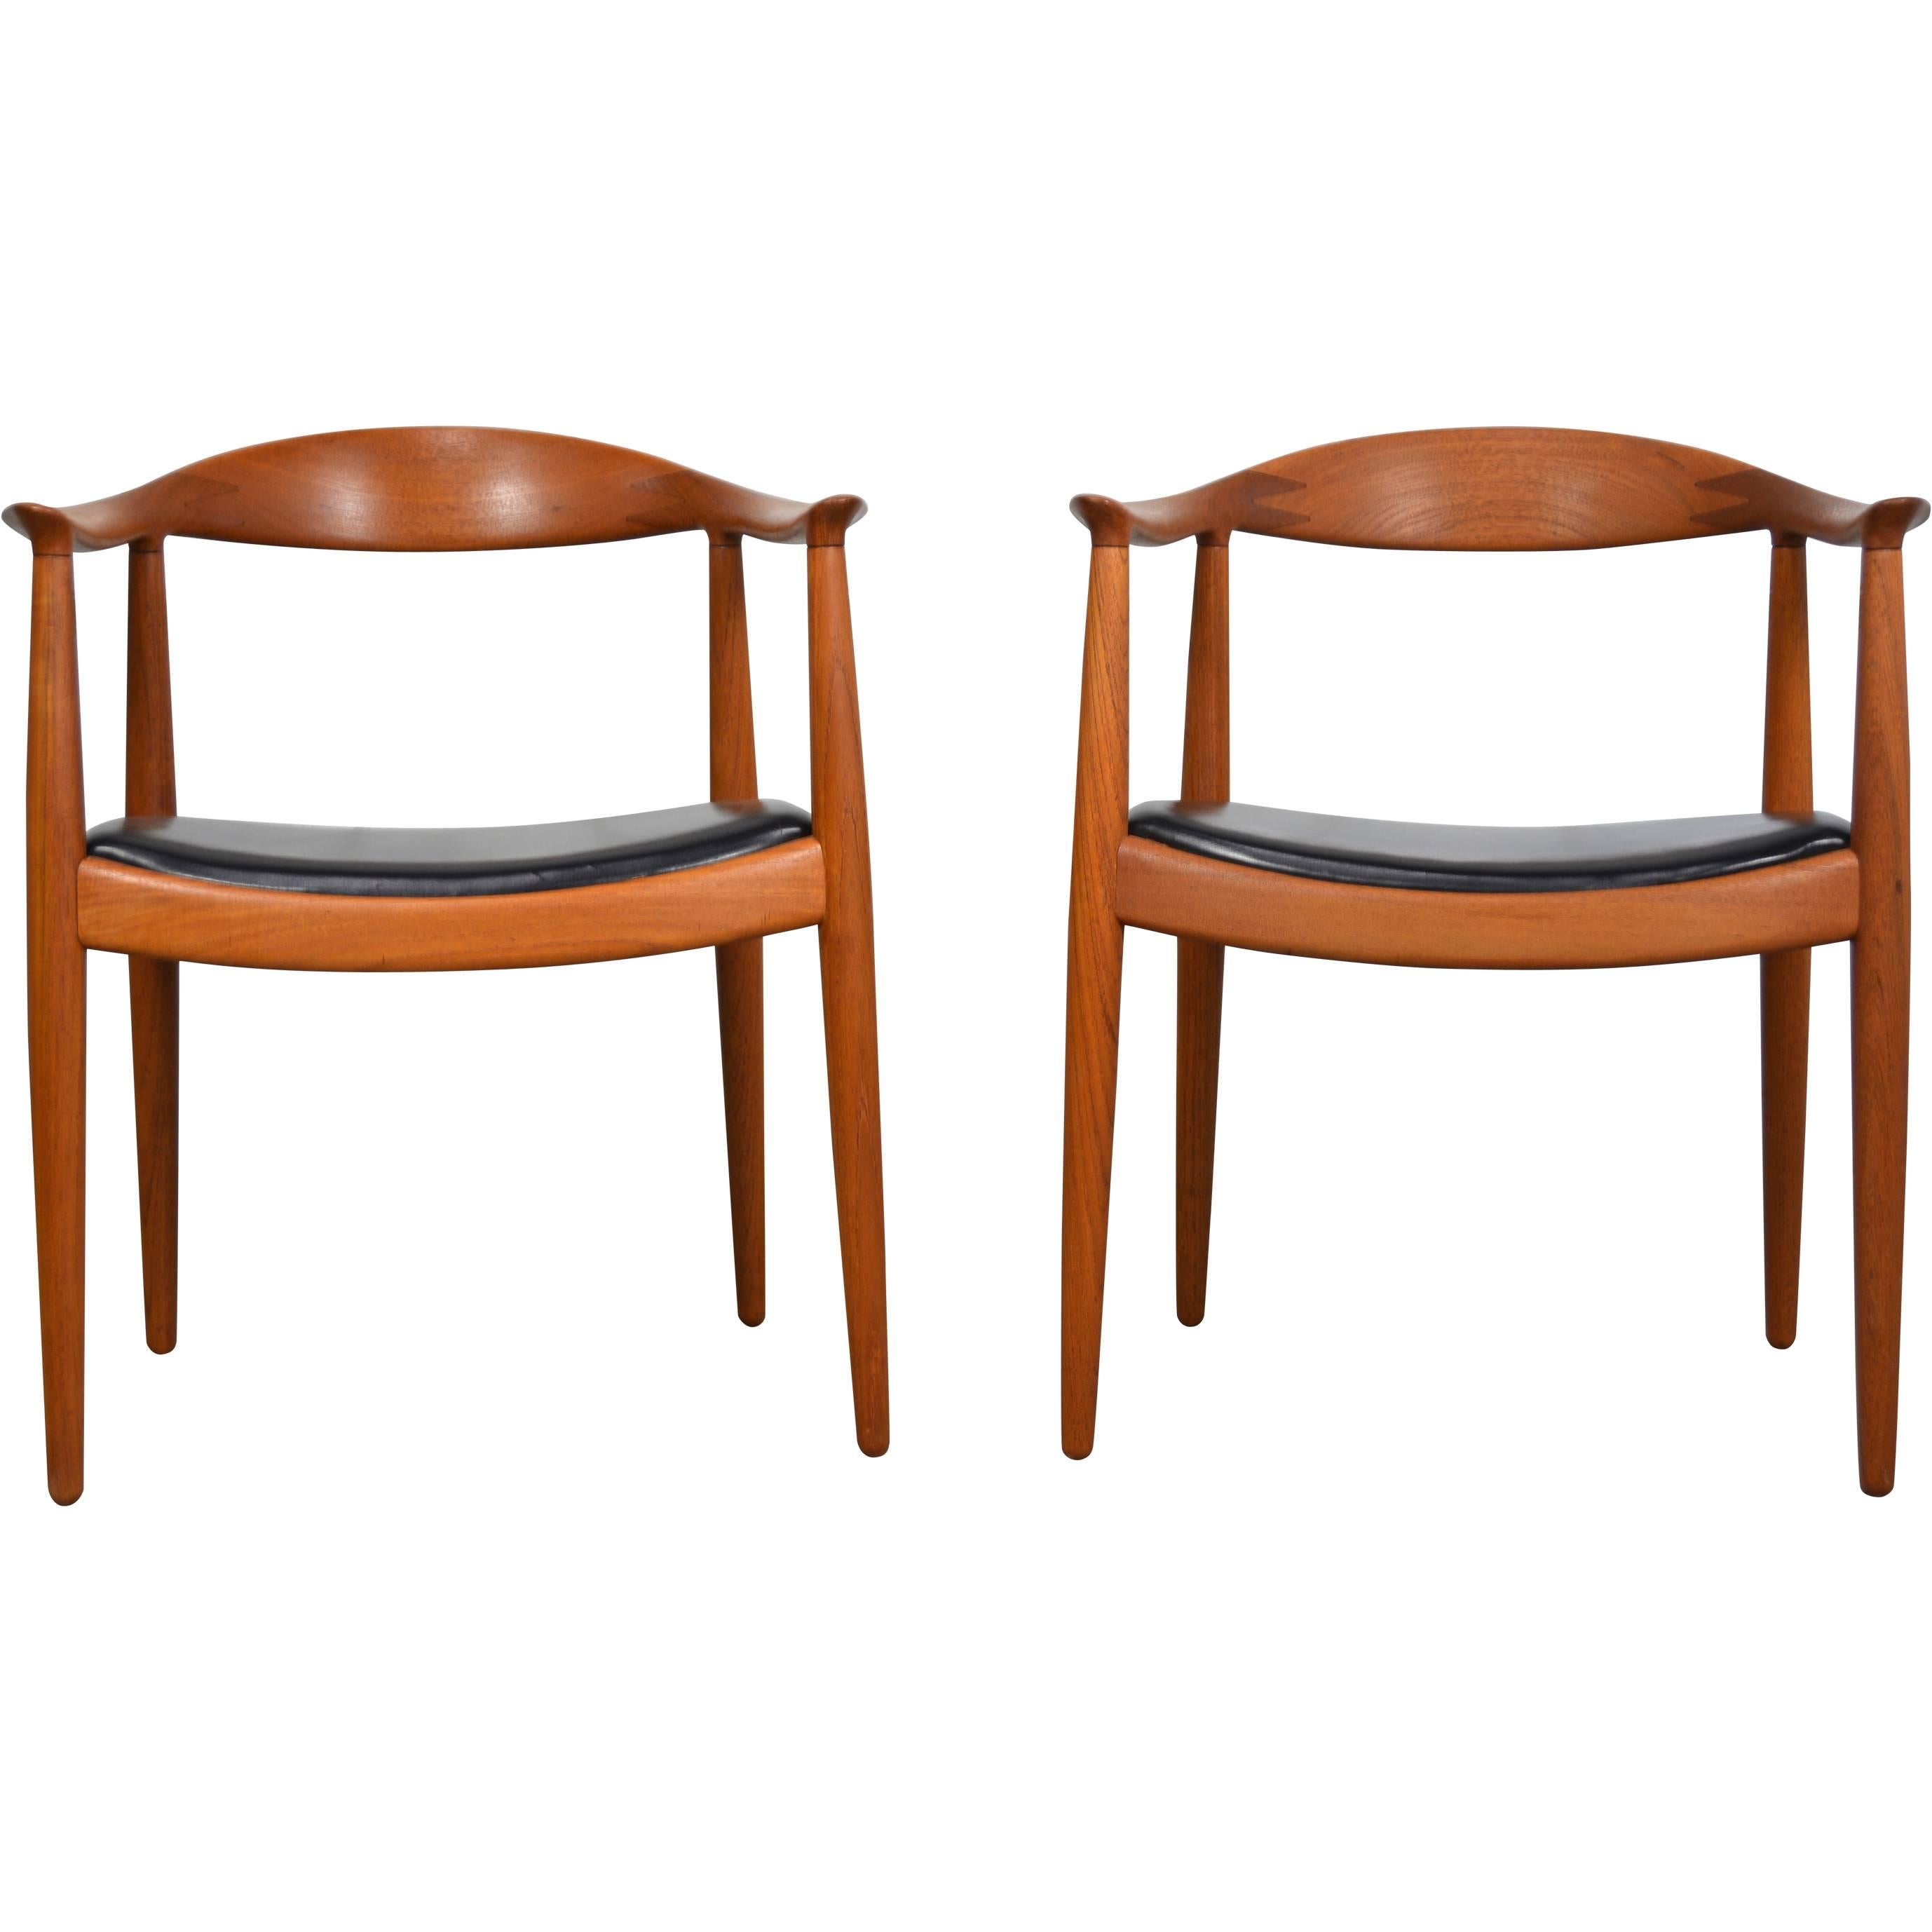 Hans Wegner Pair of "Round" Chairs in Teak